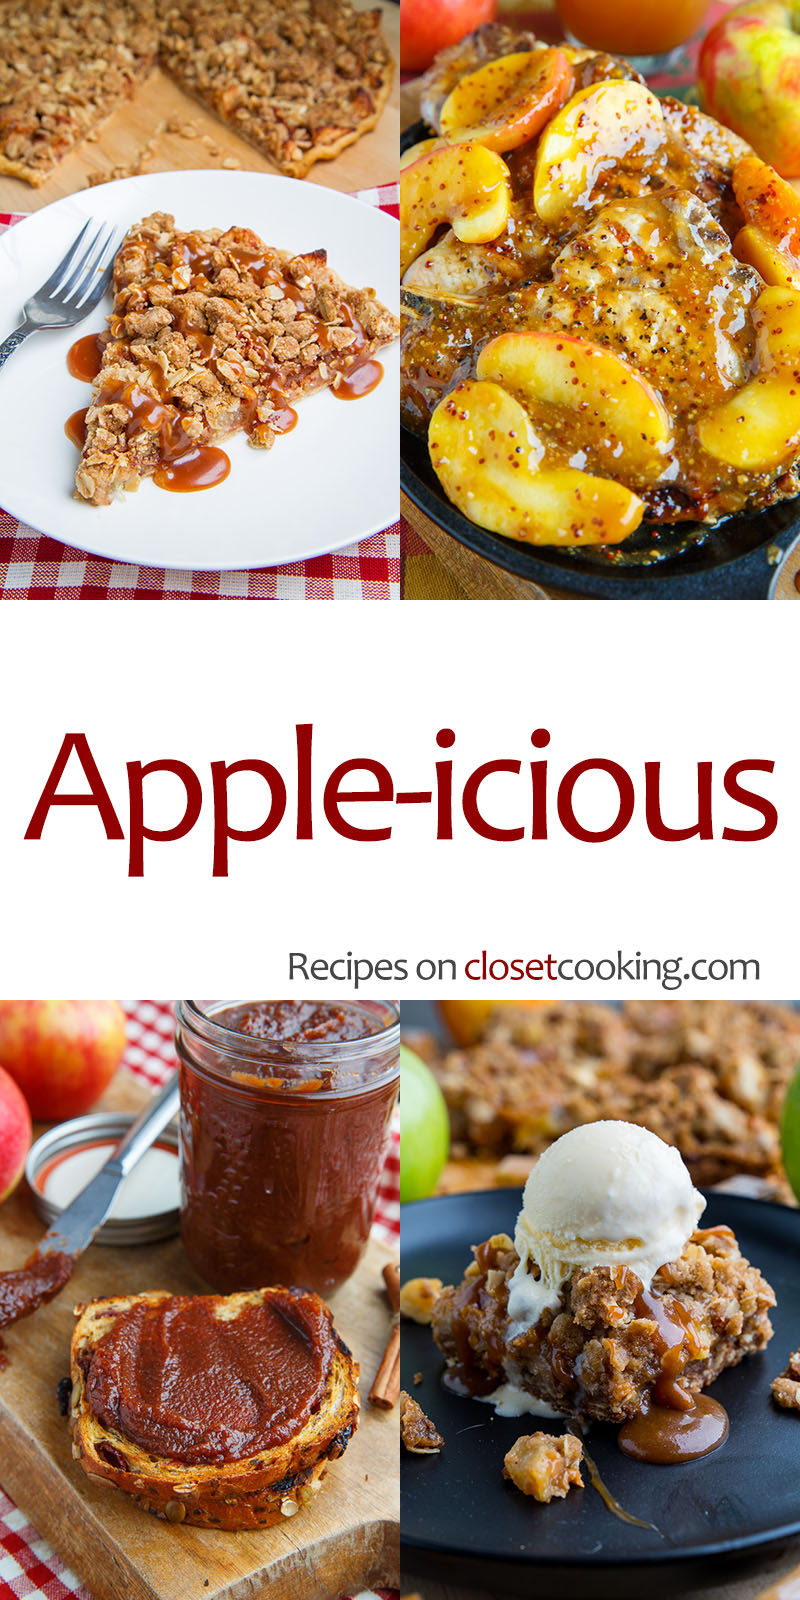 Apple-icious Recipes